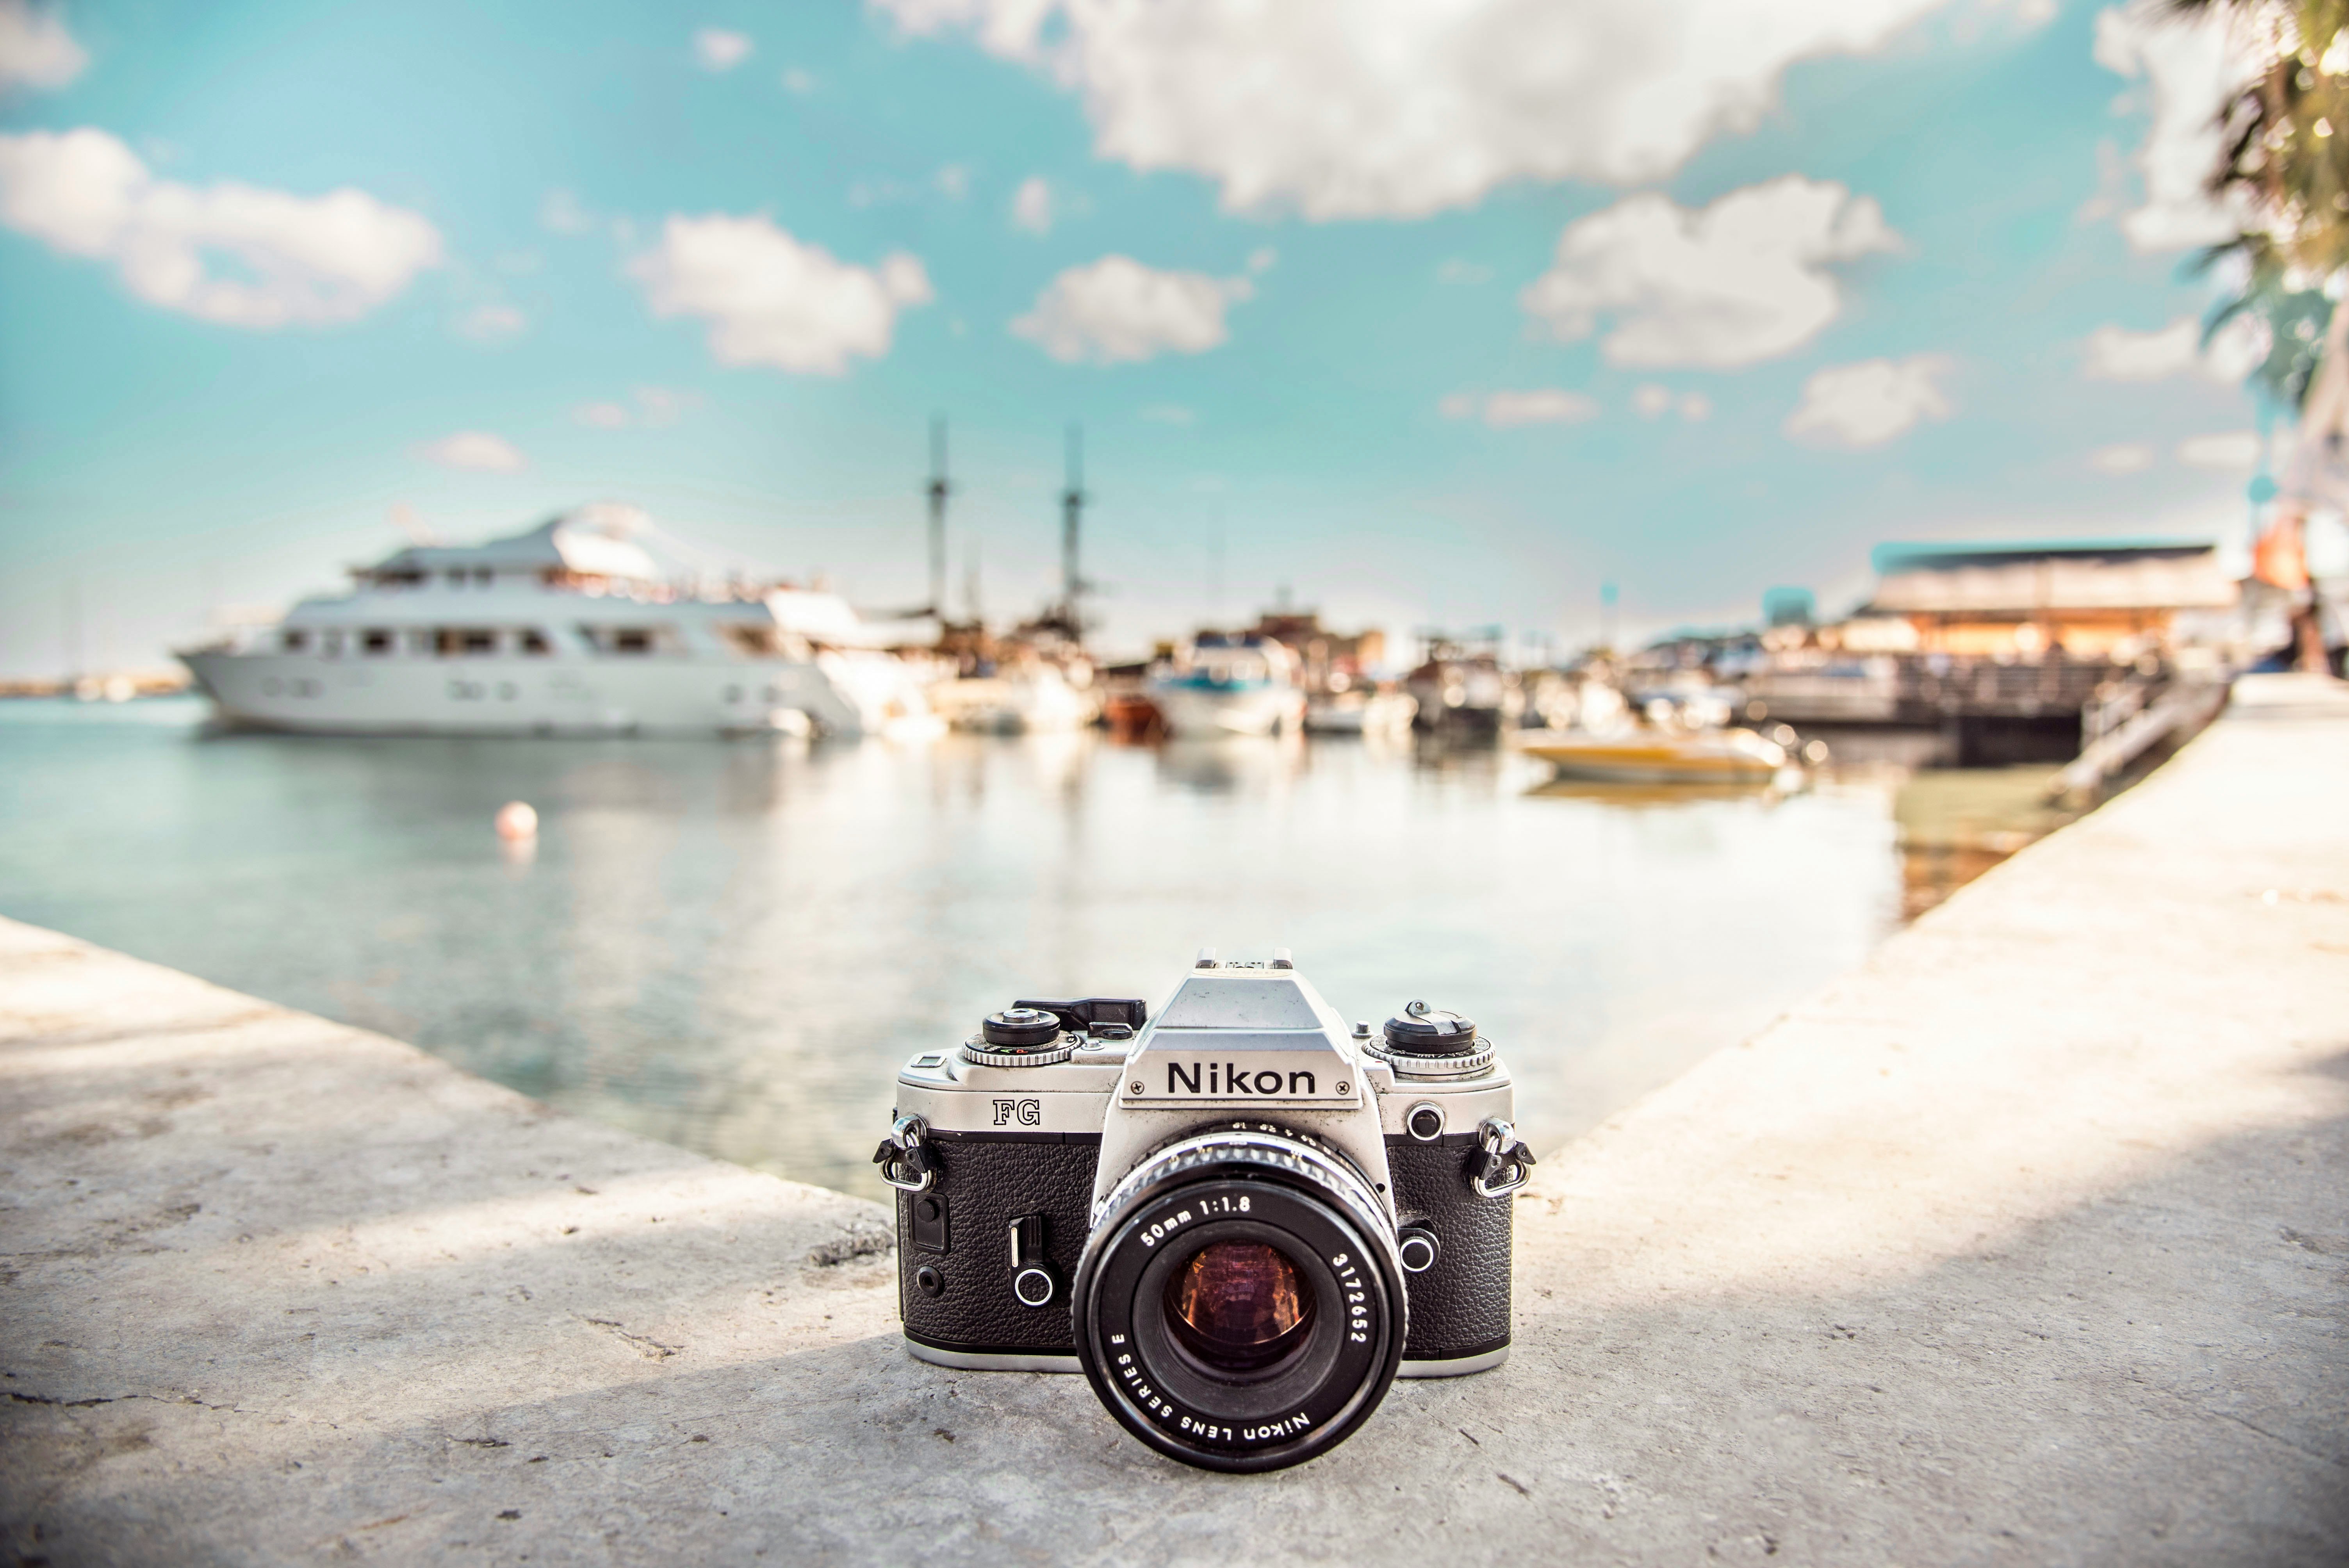 black and silver Nikon camera near boats during daytime